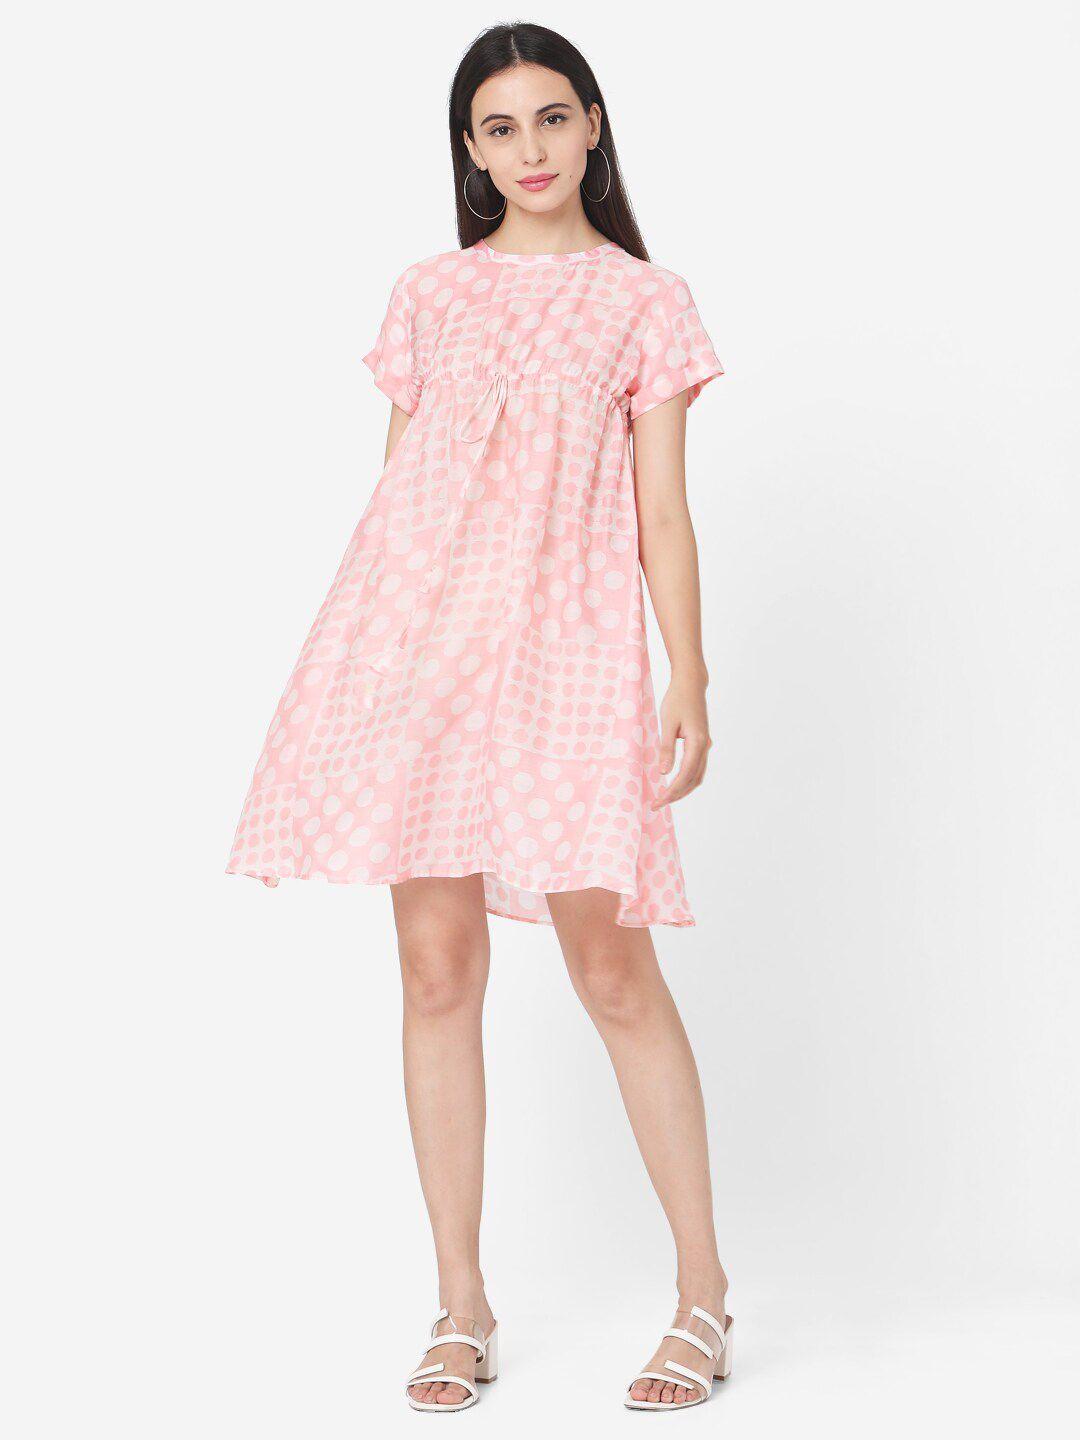 saanjh peach-coloured polka dots printed ruched a-line dress